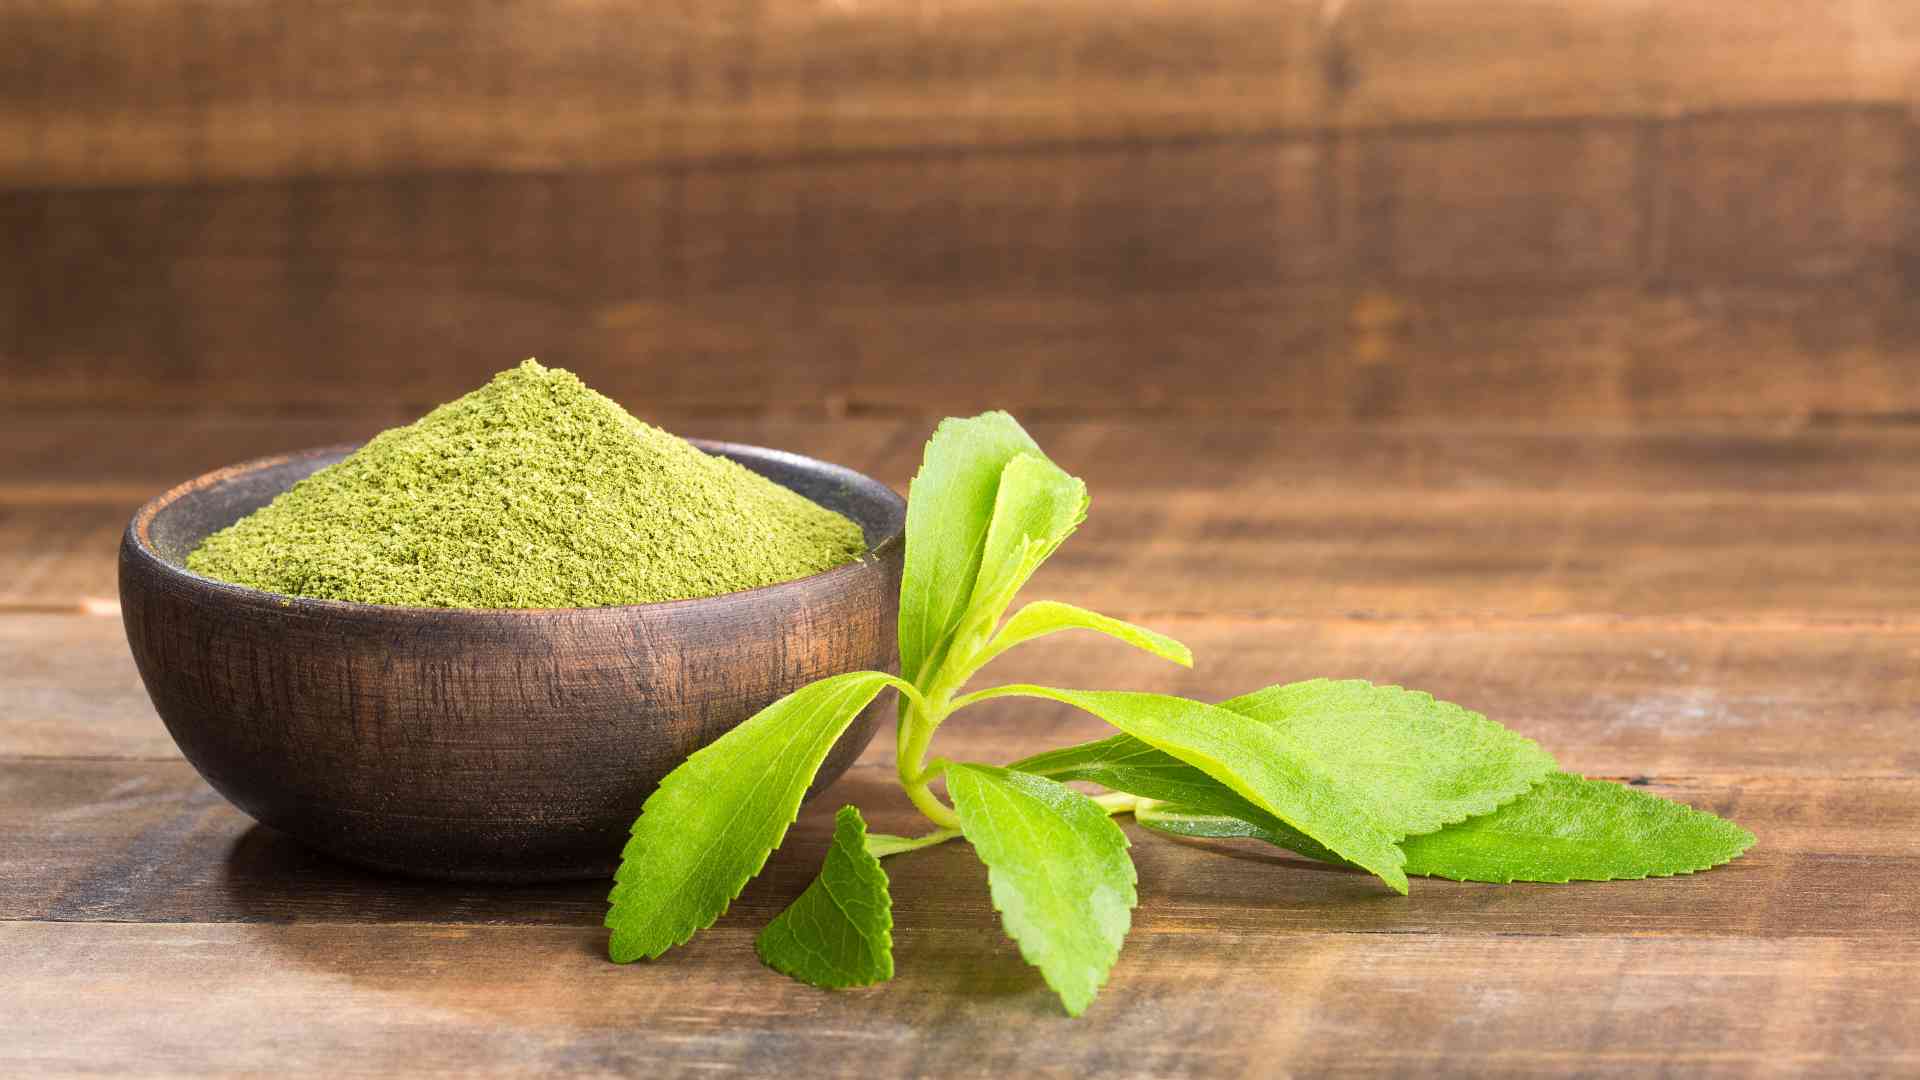 Stevia Plant: A Healthier Alternative To Sugar